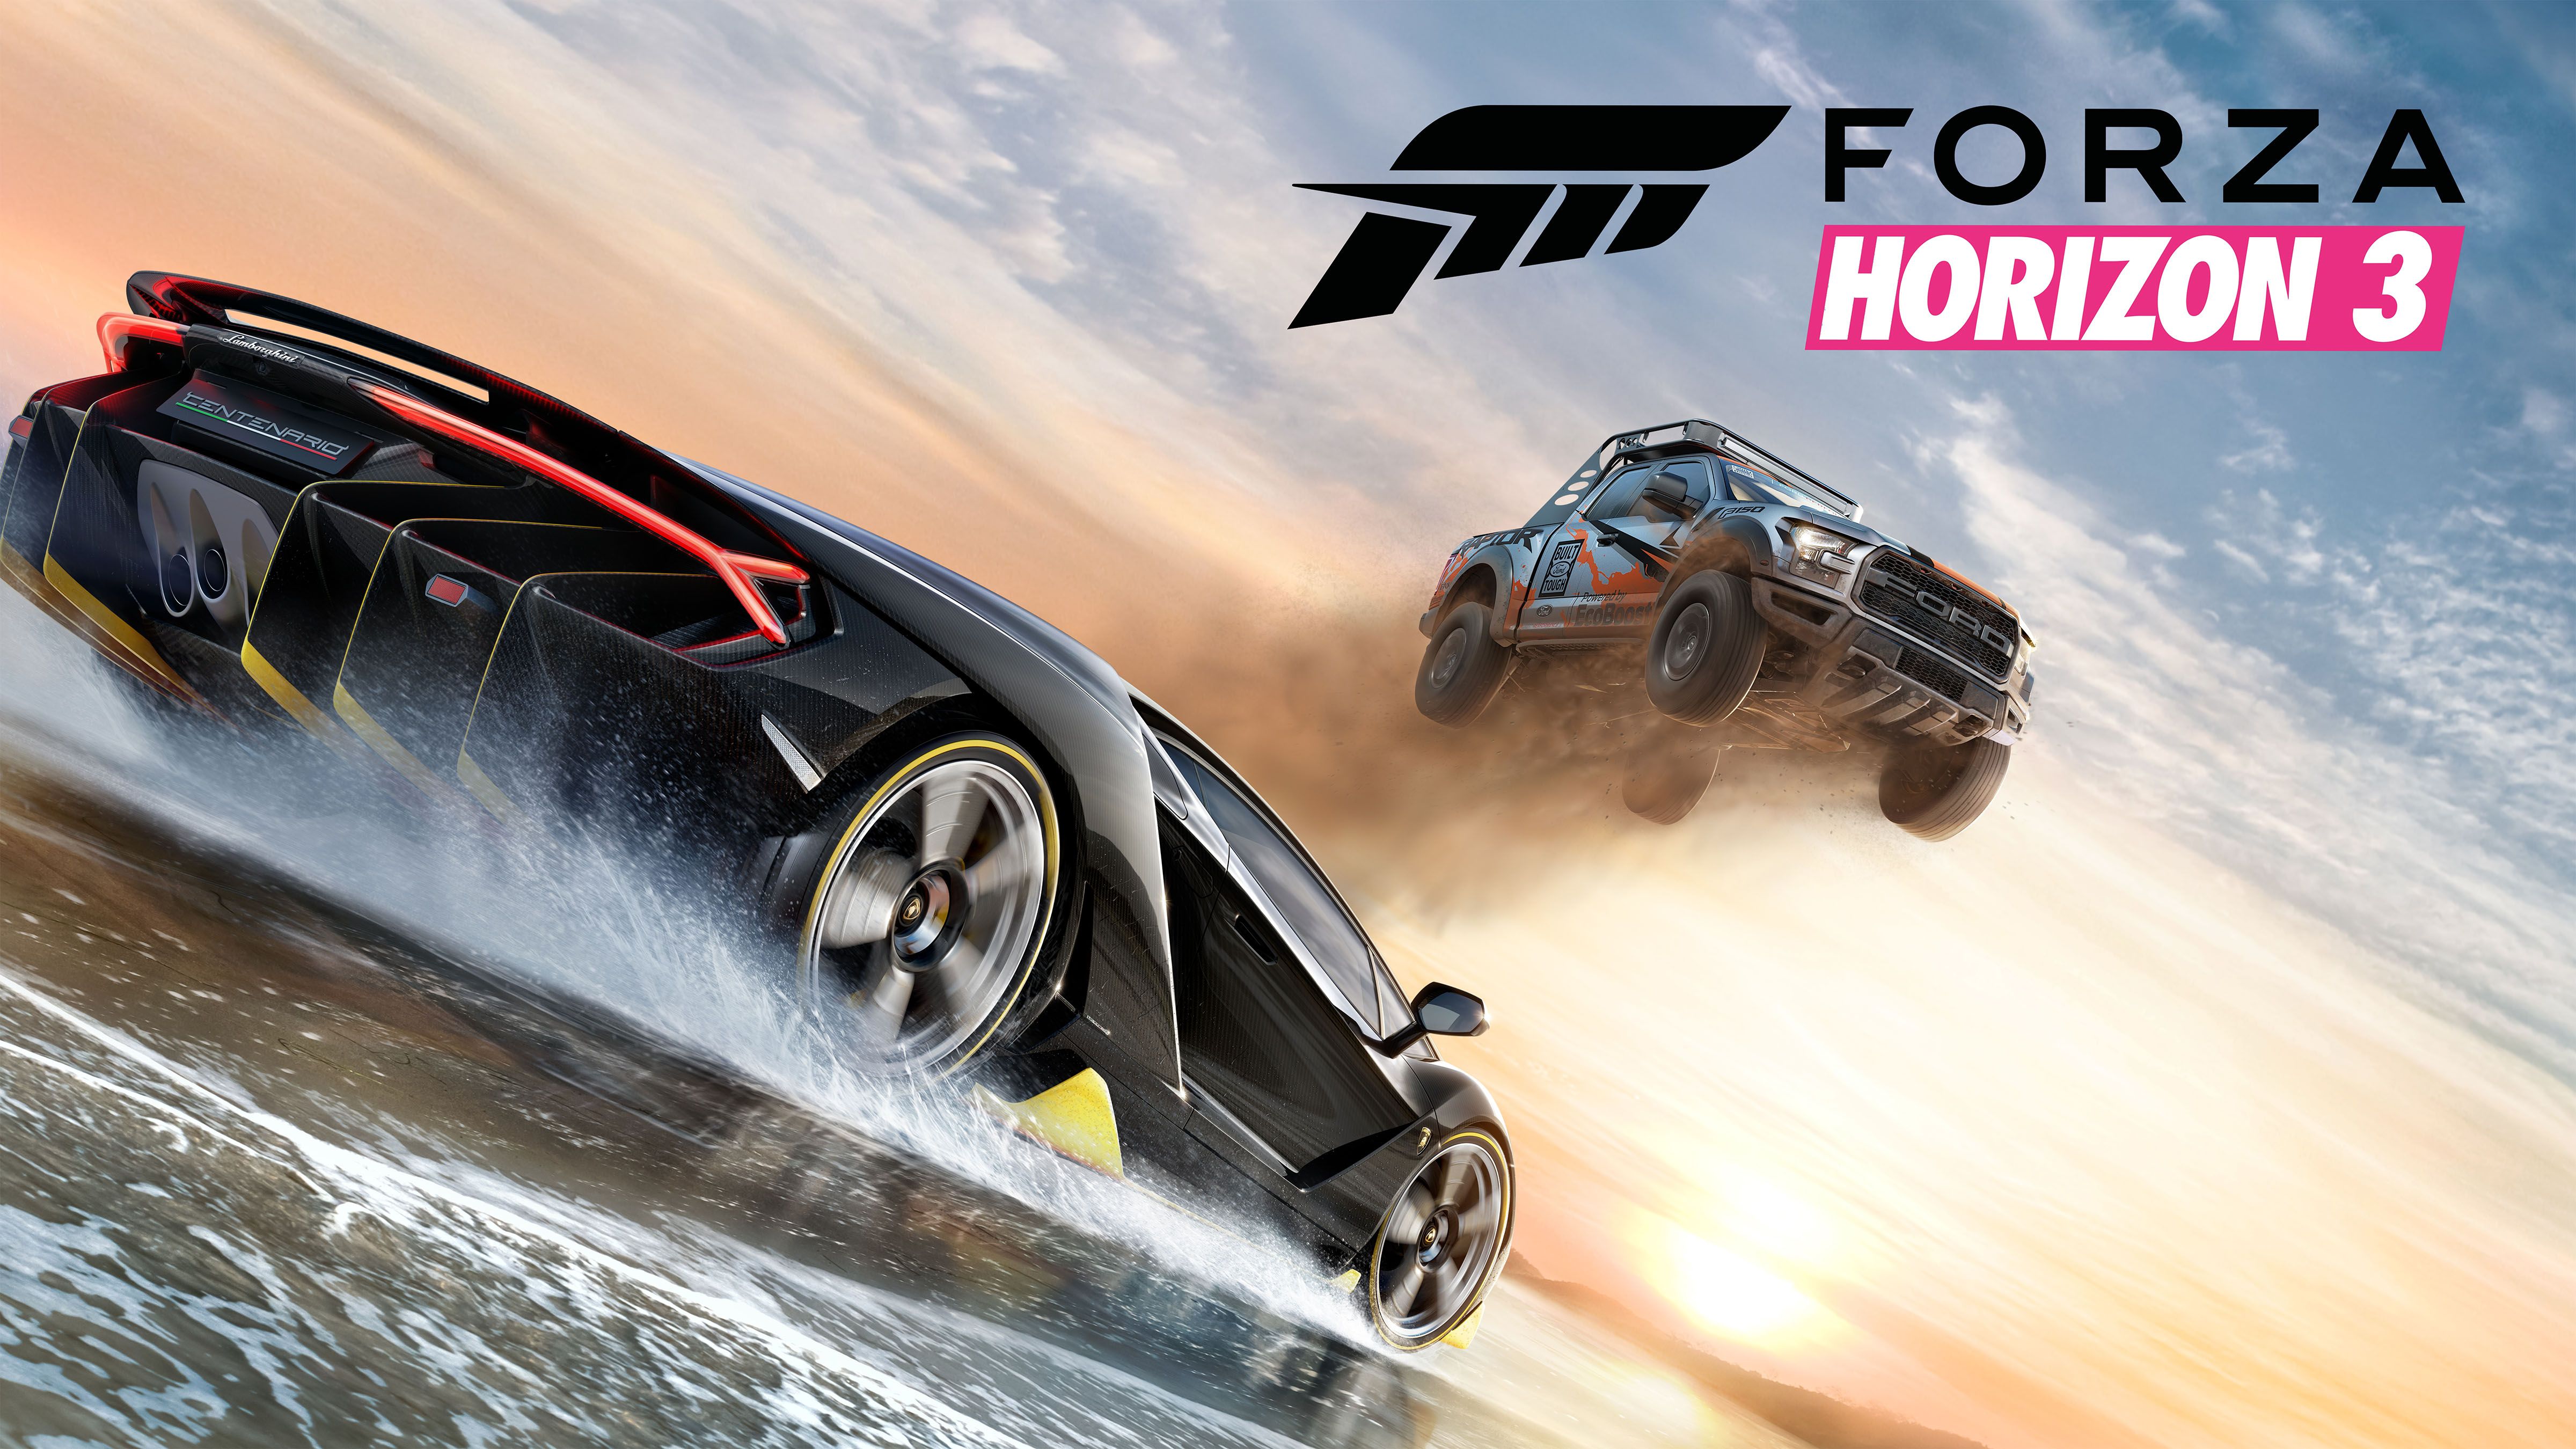 Video Game Forza Horizon 3 4k Ultra HD Wallpaper